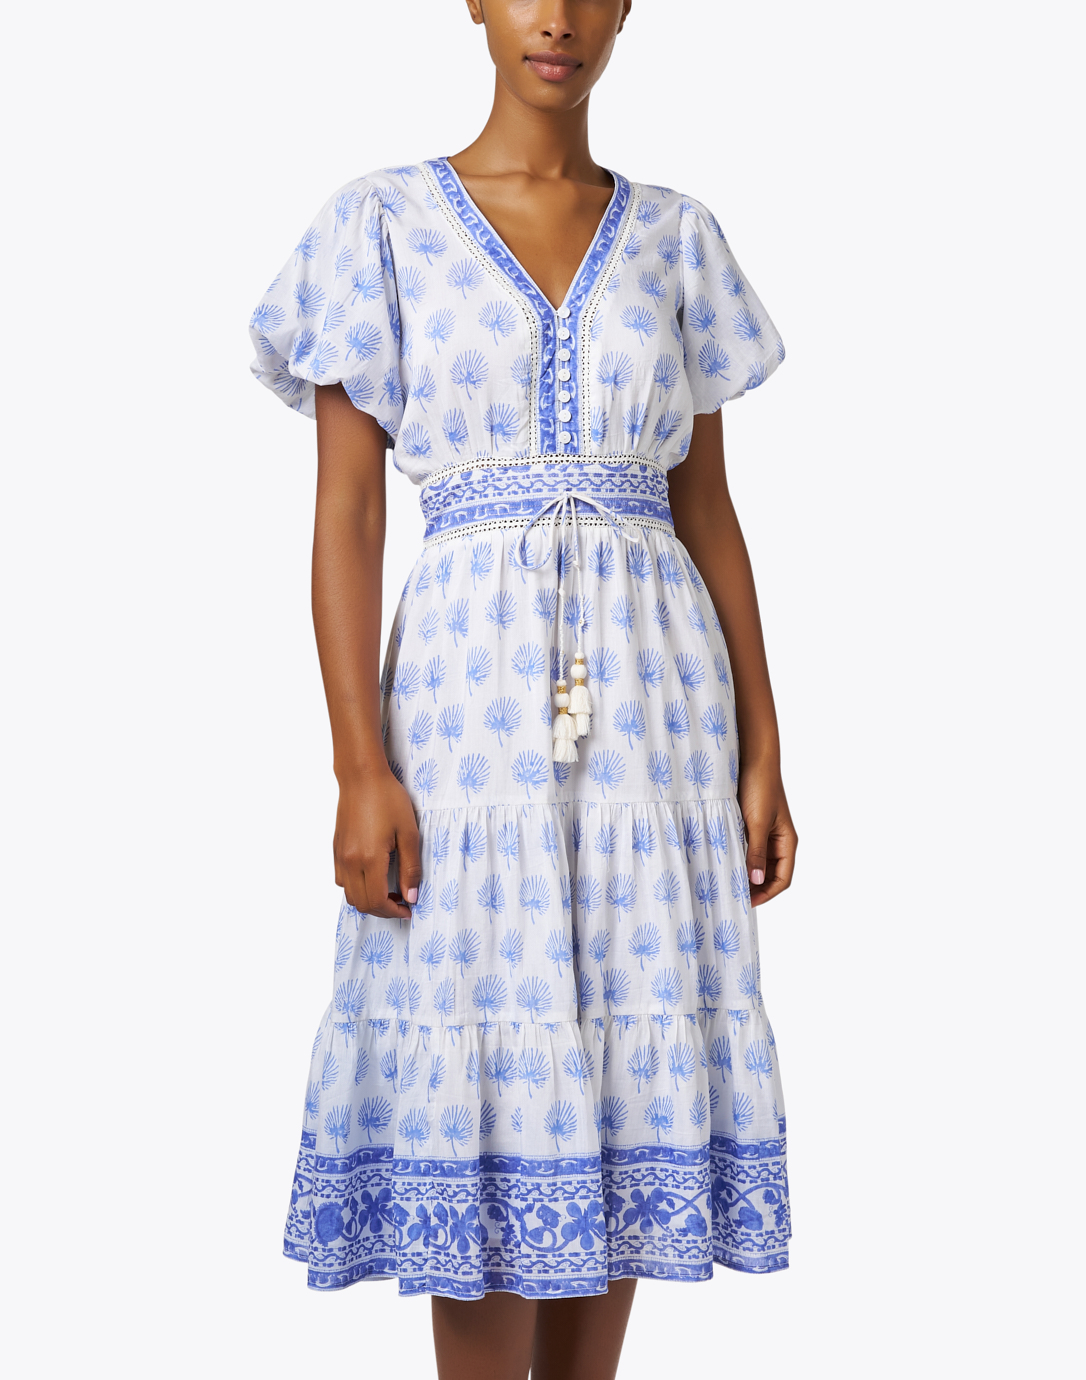 blue and white print dress